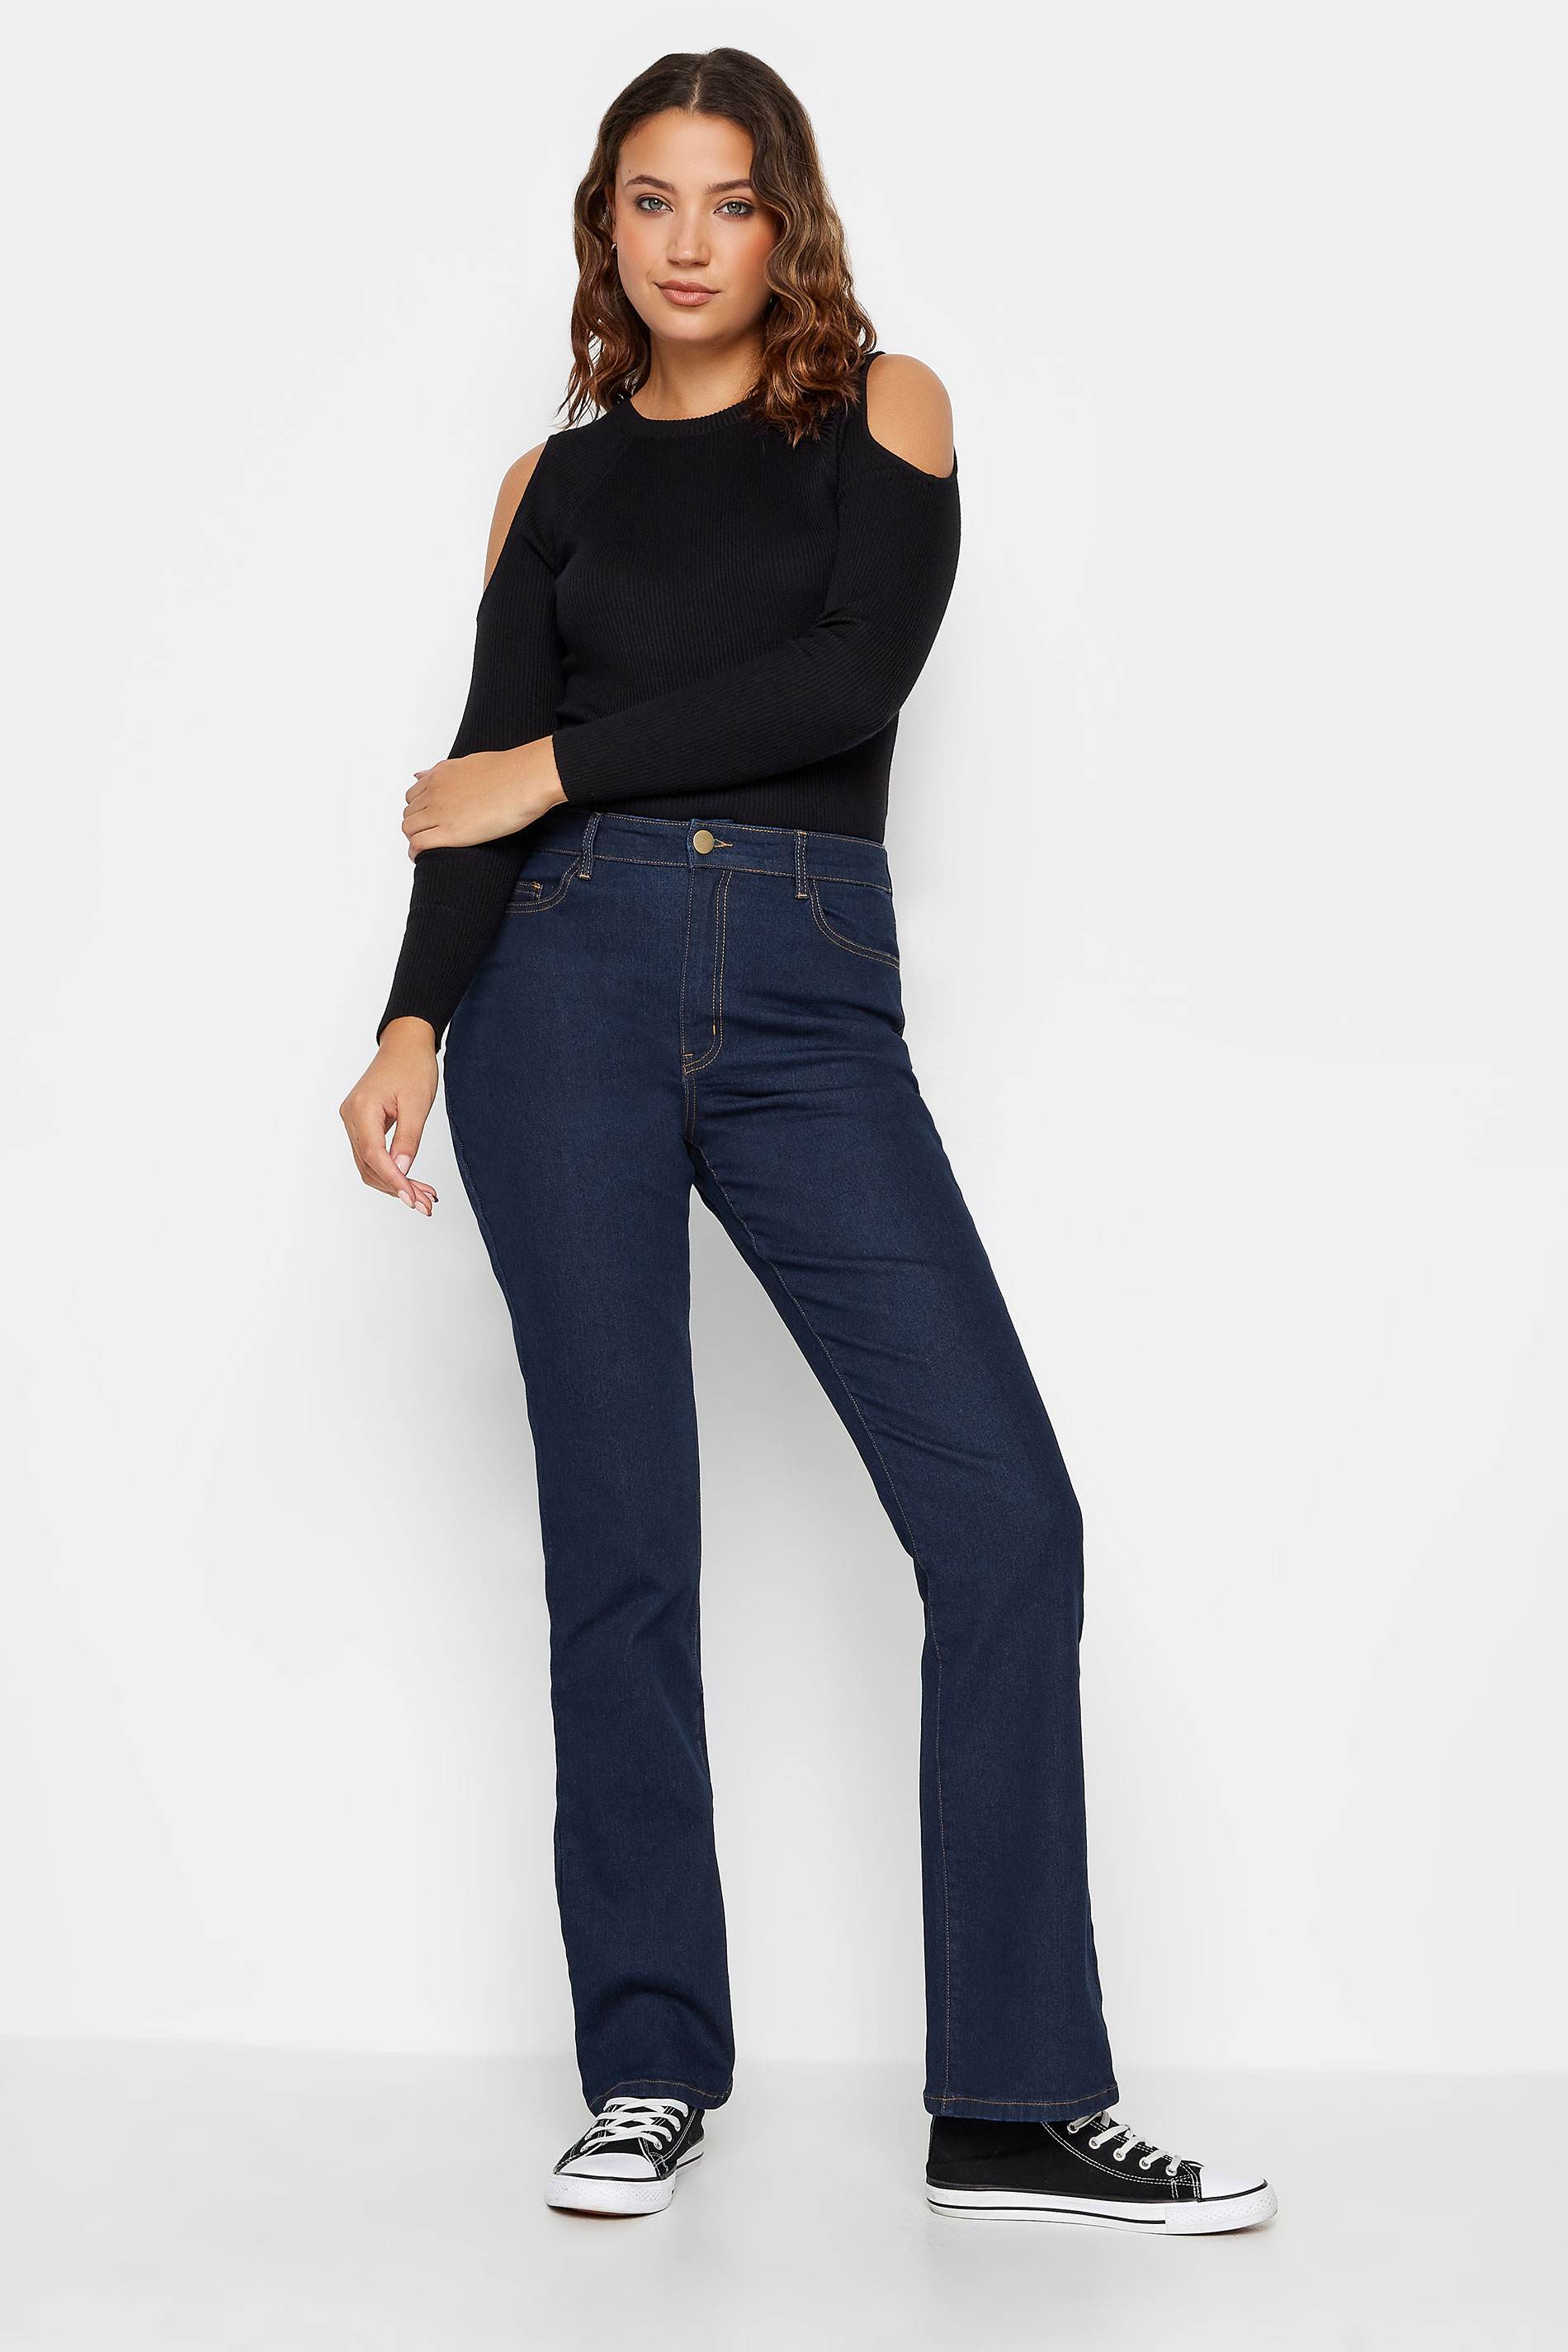 LTS Tall Indigo Blue Denim Bootcut Jeans | Long Tall Sally 3